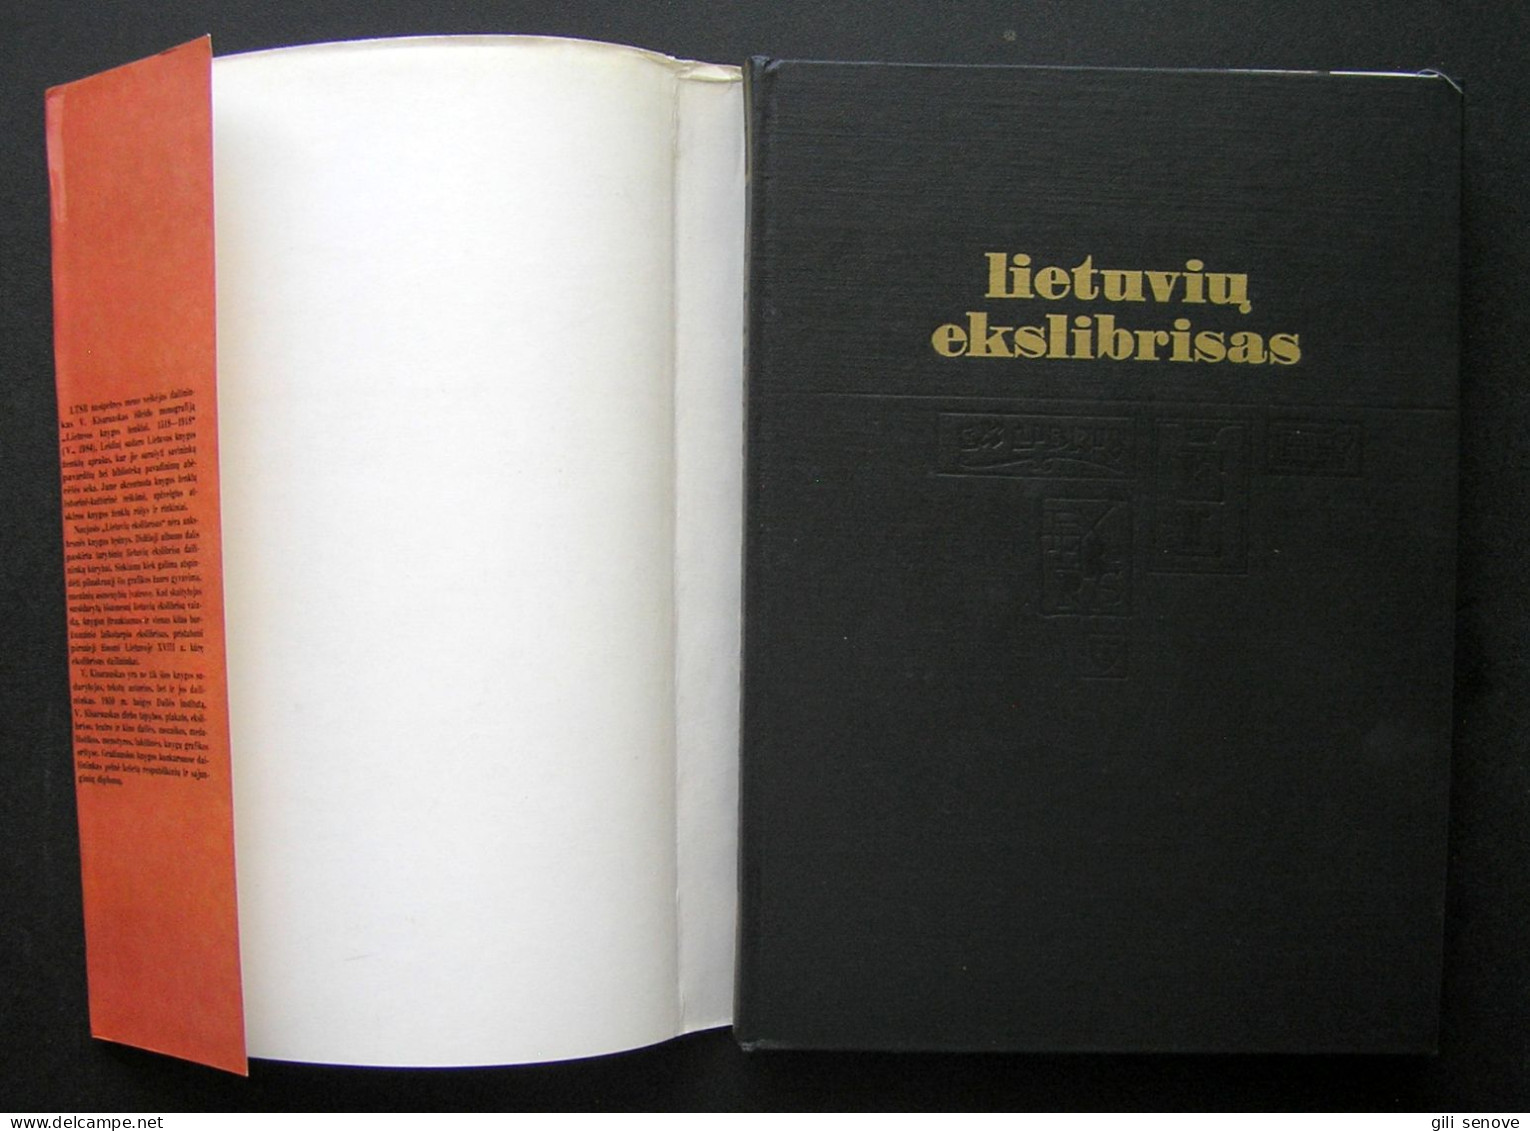 Lithuanian Book / Lietuvių Ekslibrisas By Kisarauskas 1991 - Culture